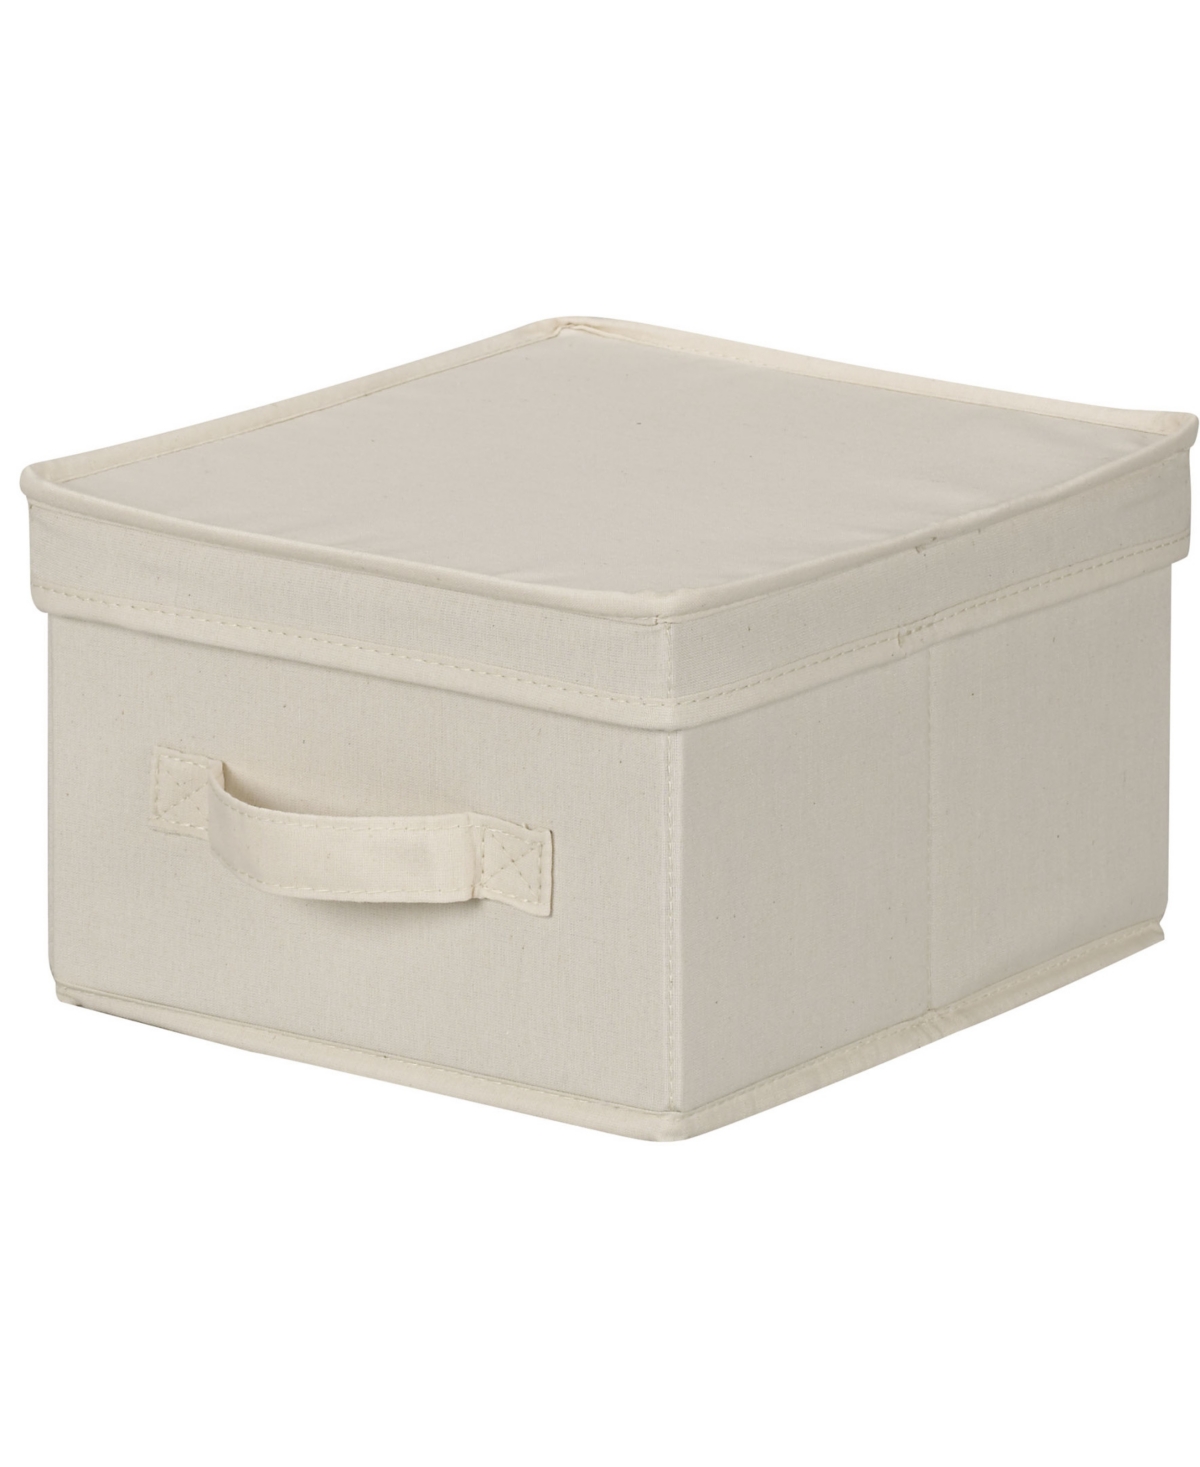 Medium Storage Bin with Lid, Natural - Cream